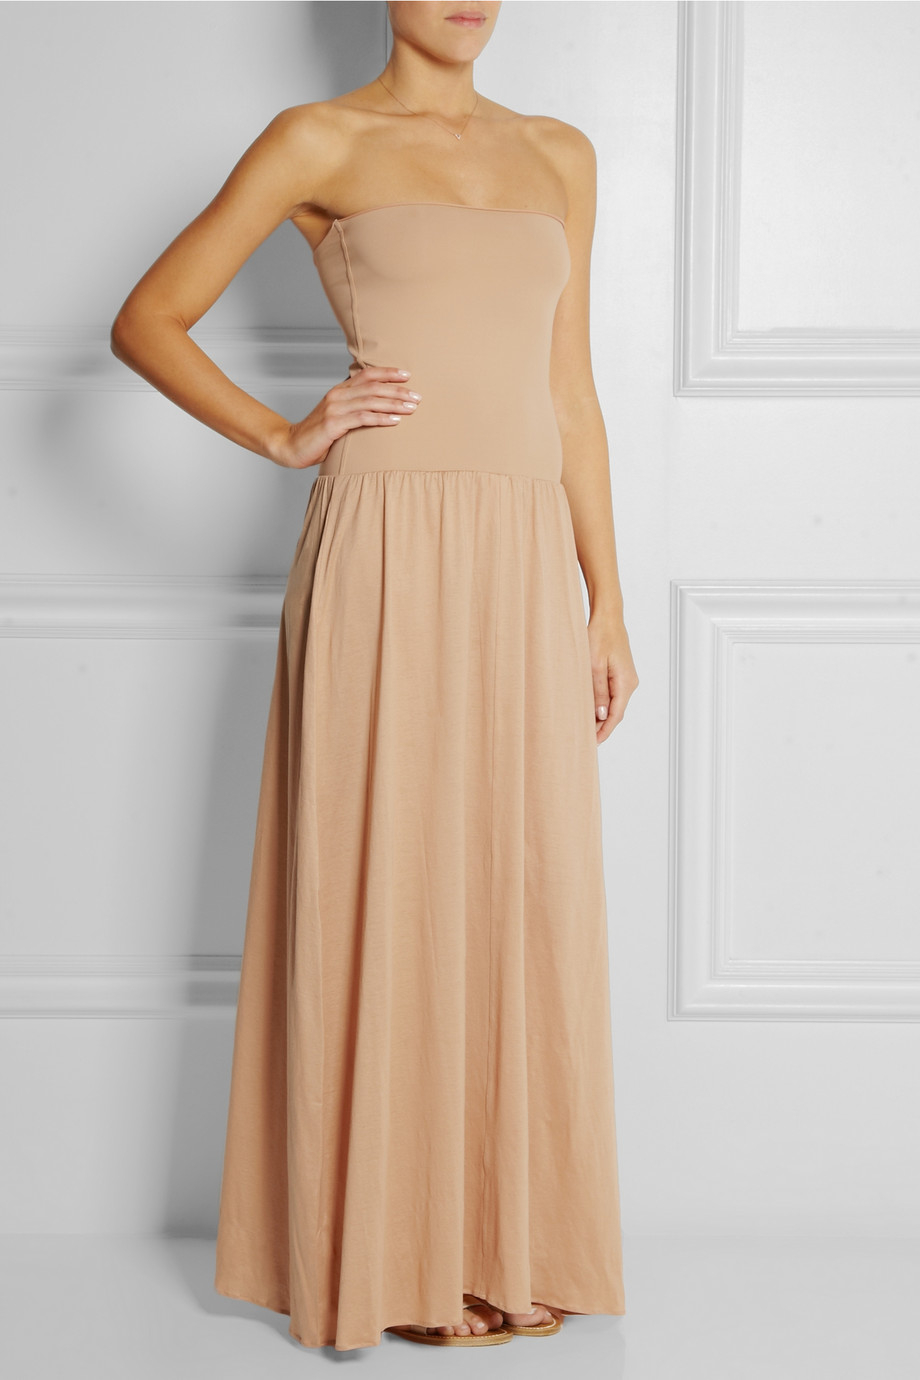 Lyst - Eres Ankara Cotton-Jersey Maxi Dress in Brown